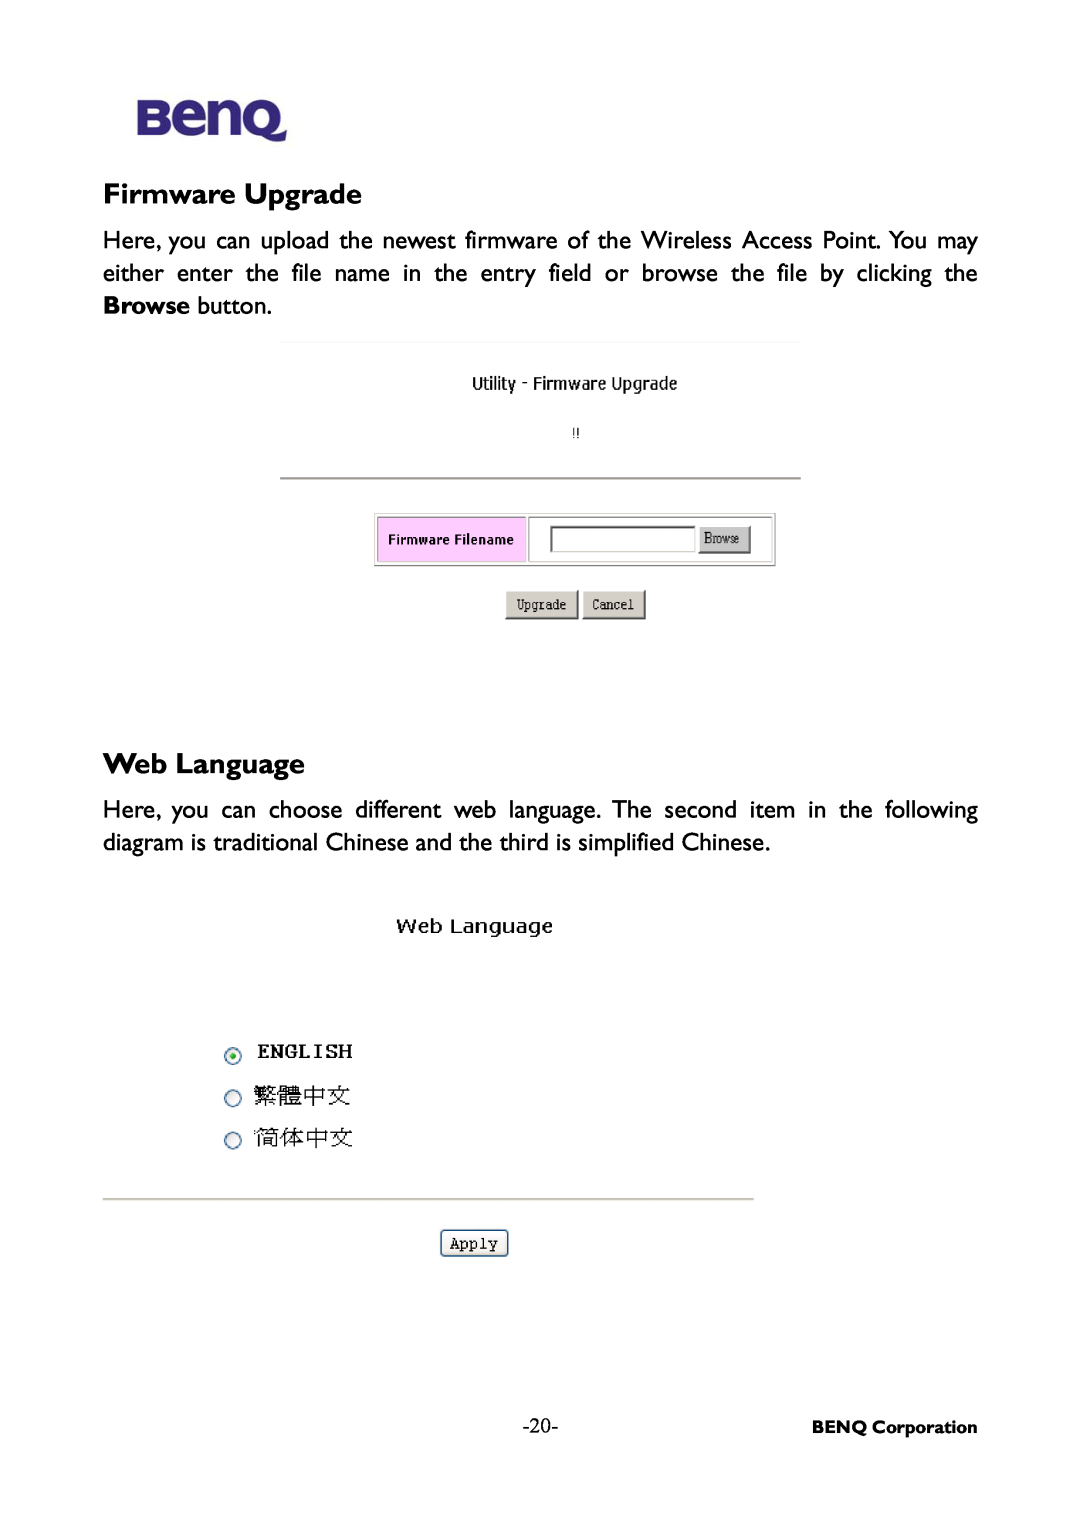 BenQ AWL-500 user manual Firmware Upgrade, Web Language 